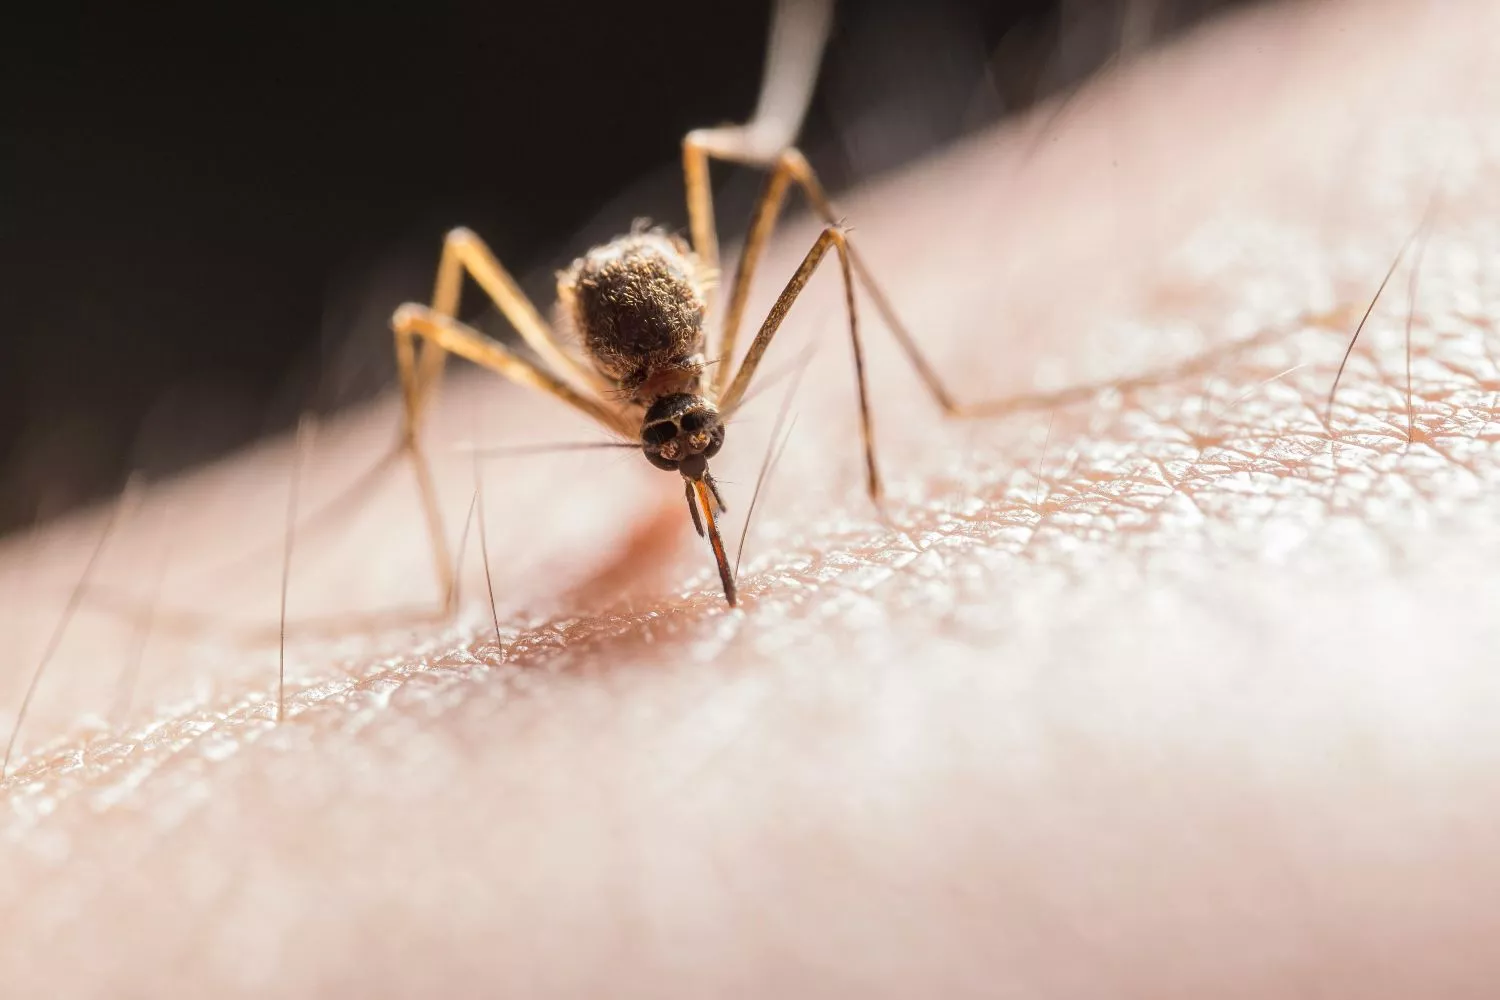 Un mosquito apunto de picar a un humano / PEXELS 